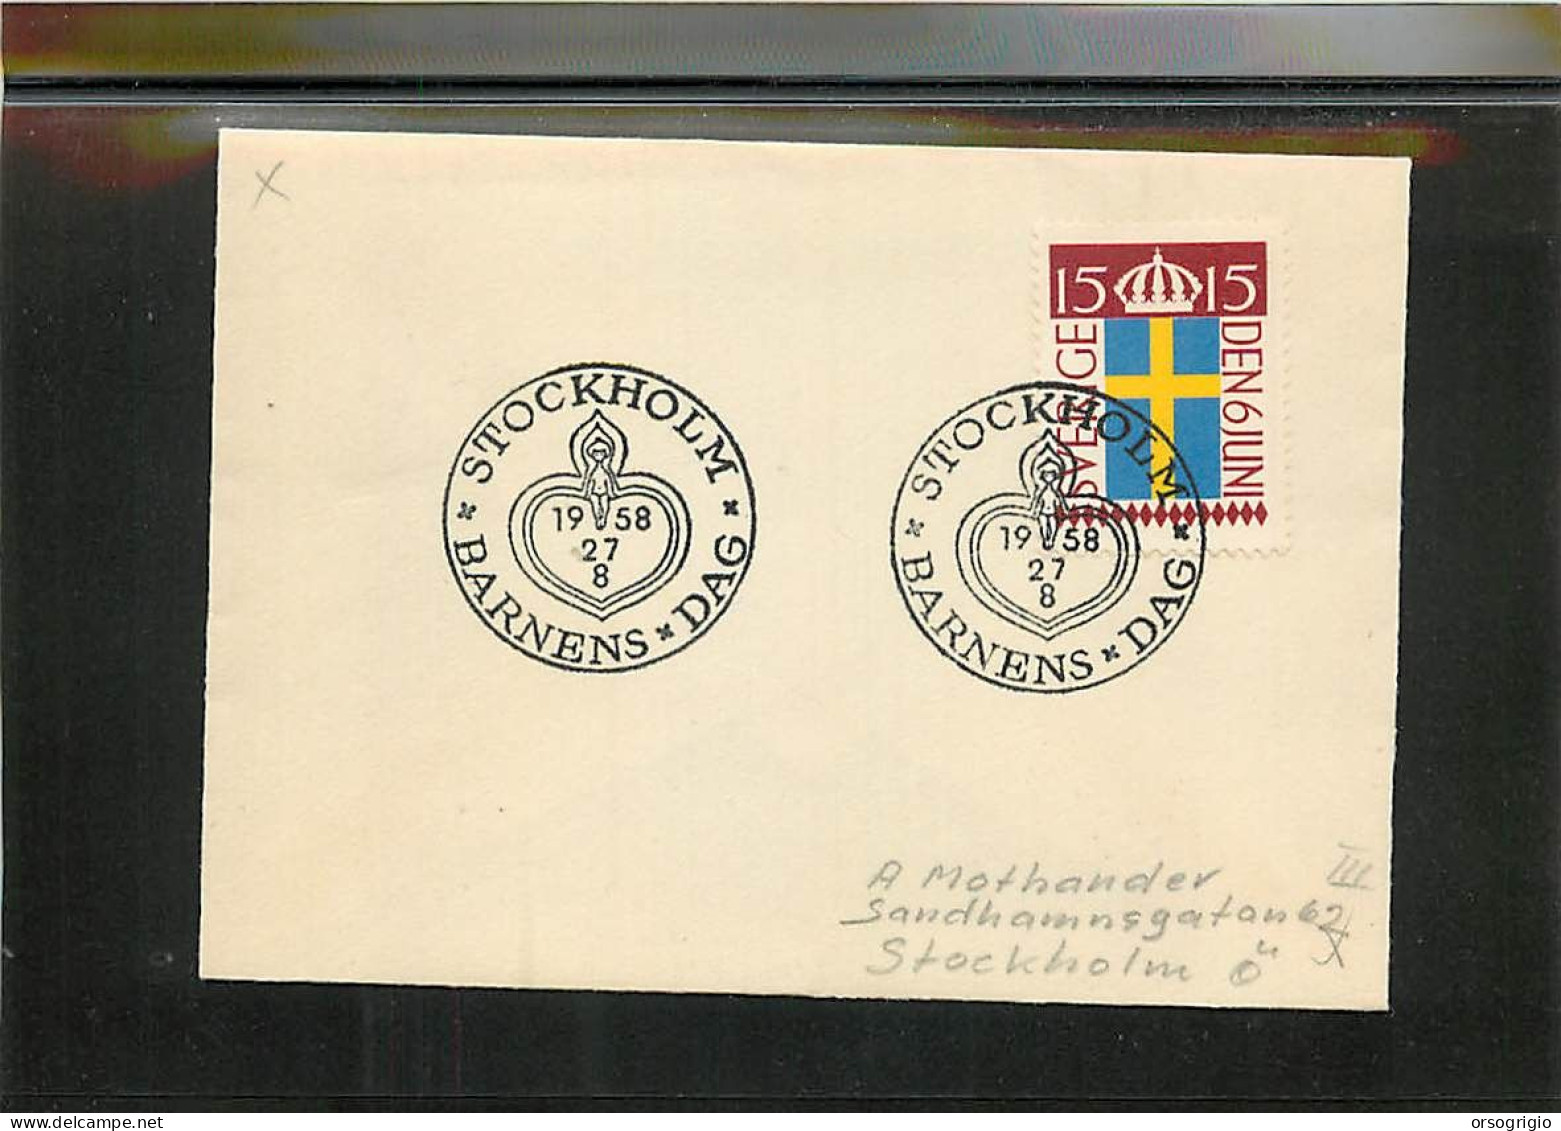 SVEZIA SVERIGE - STOCKHOLM - 1958 - BARNENS DAG - CHILDREN'S DAY - Covers & Documents